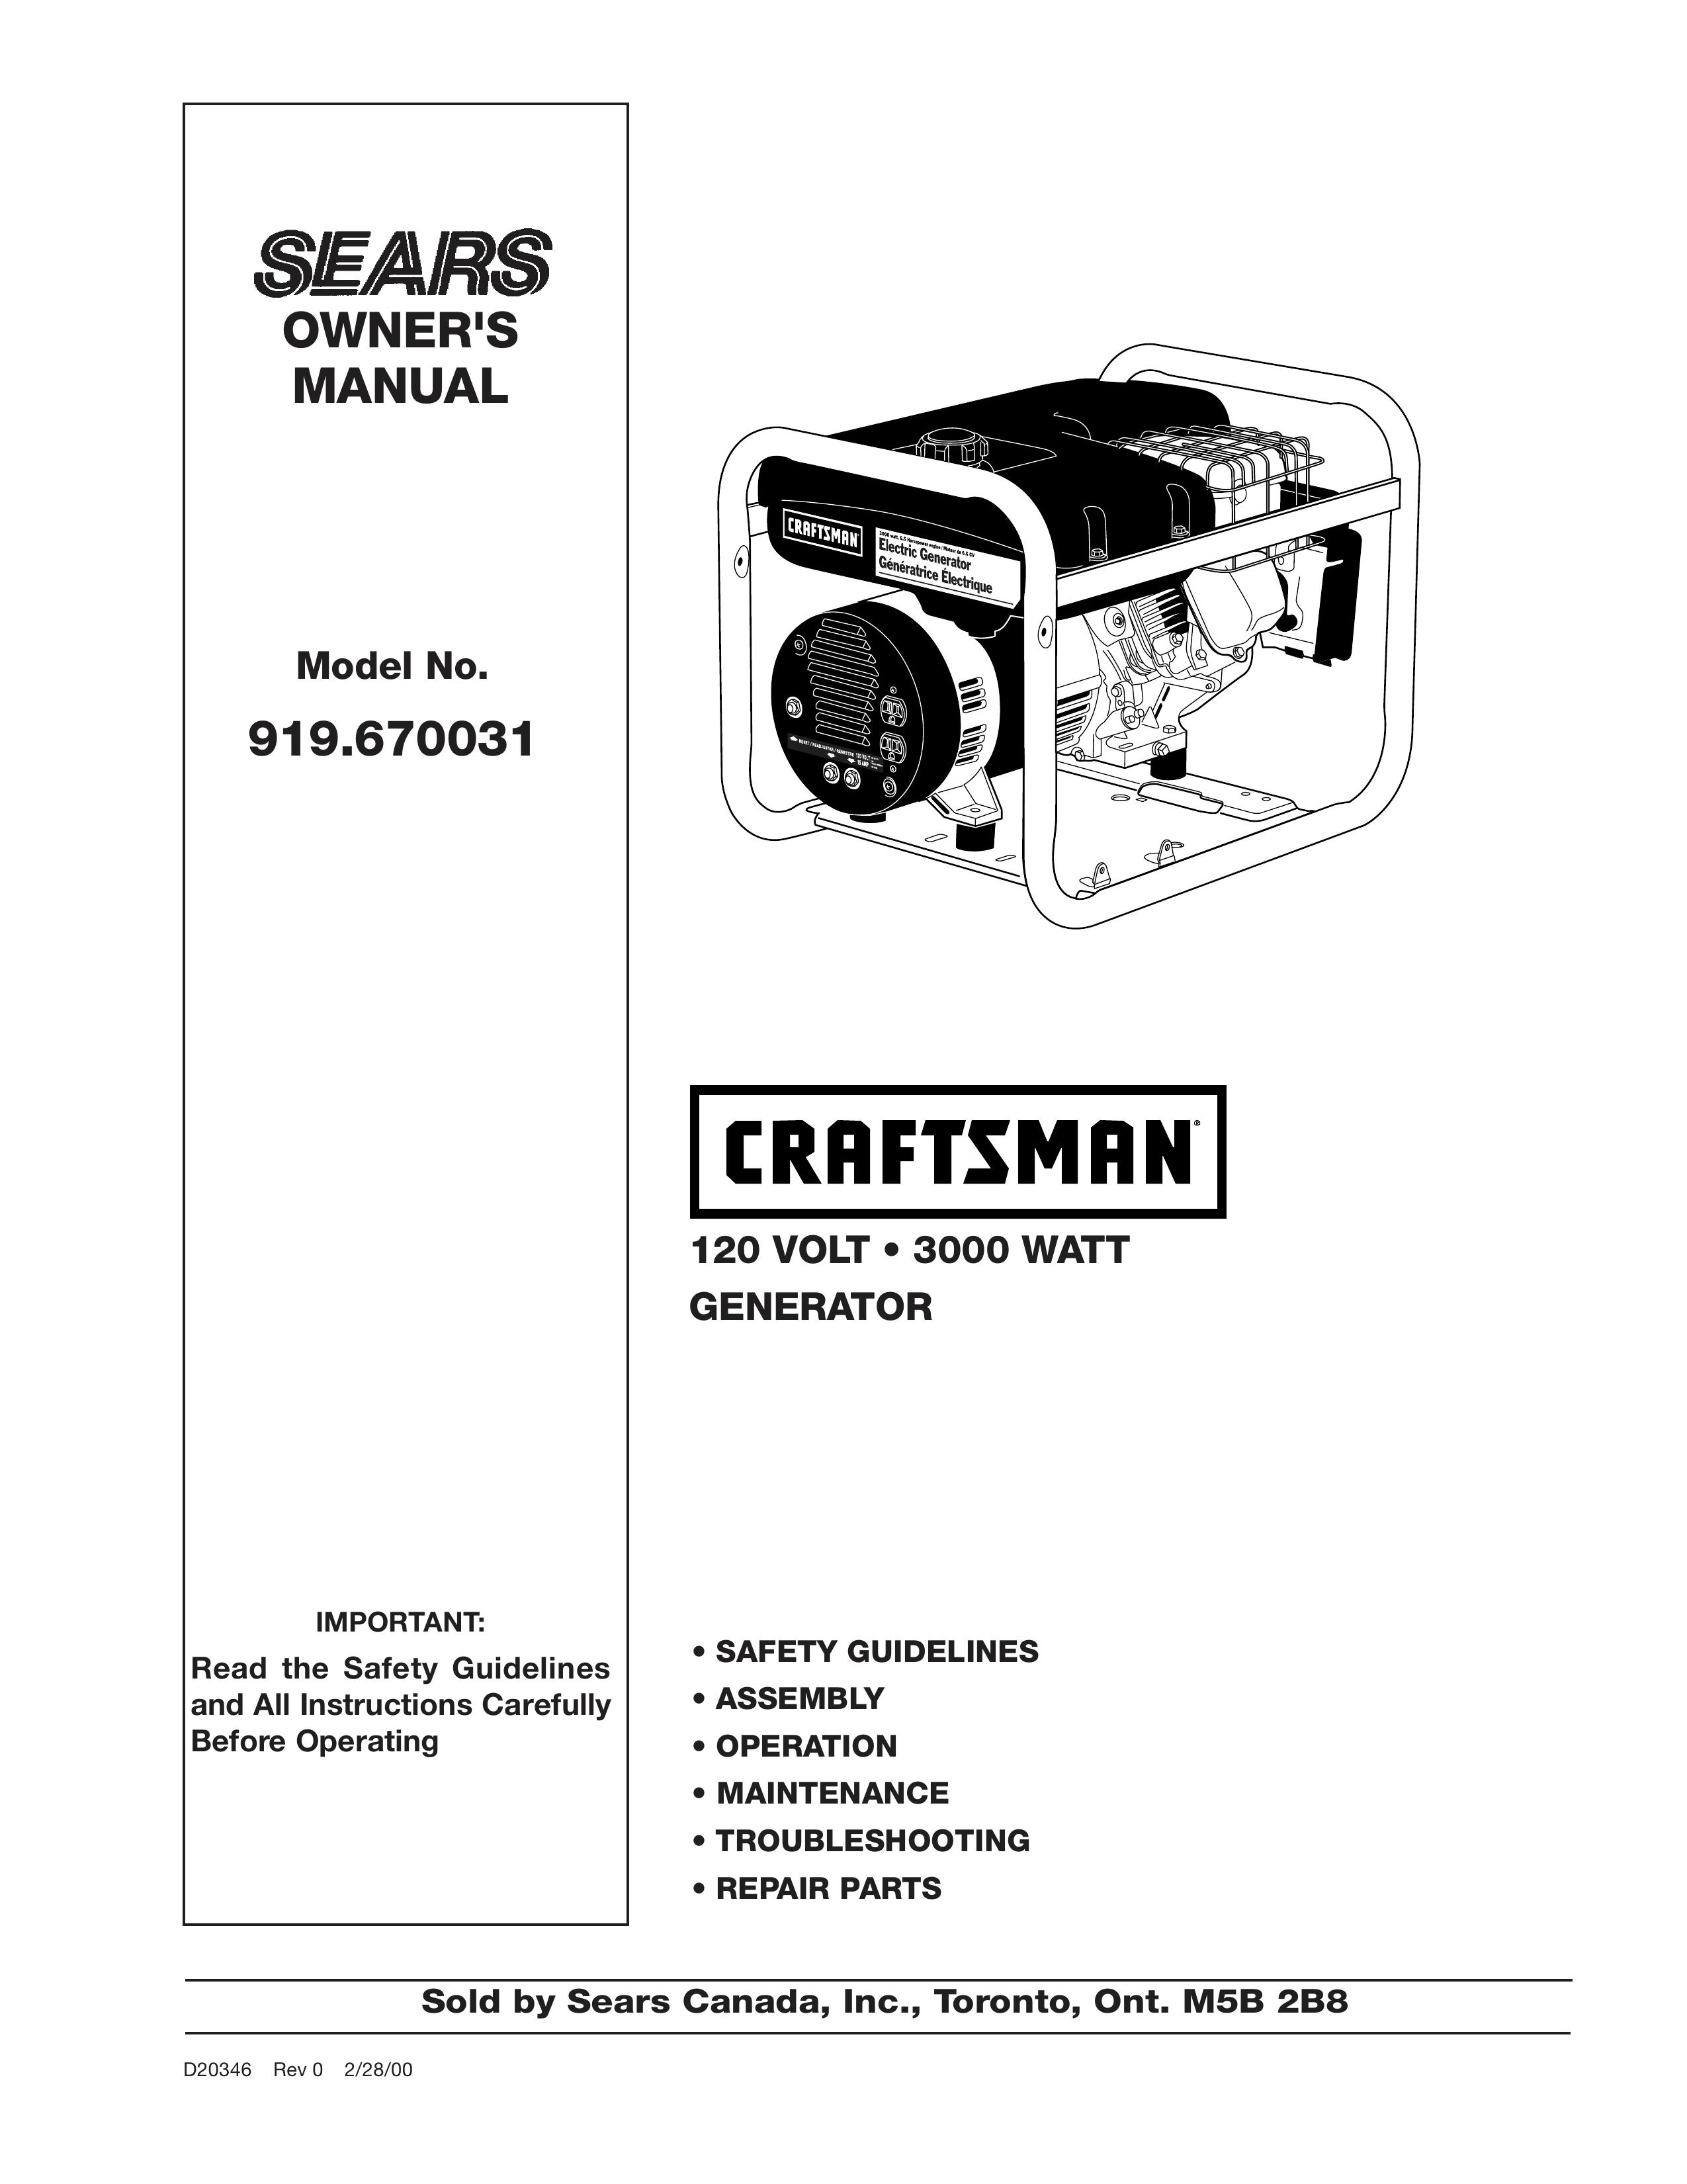 Craftsman 919.670031 Portable Generator User Manual